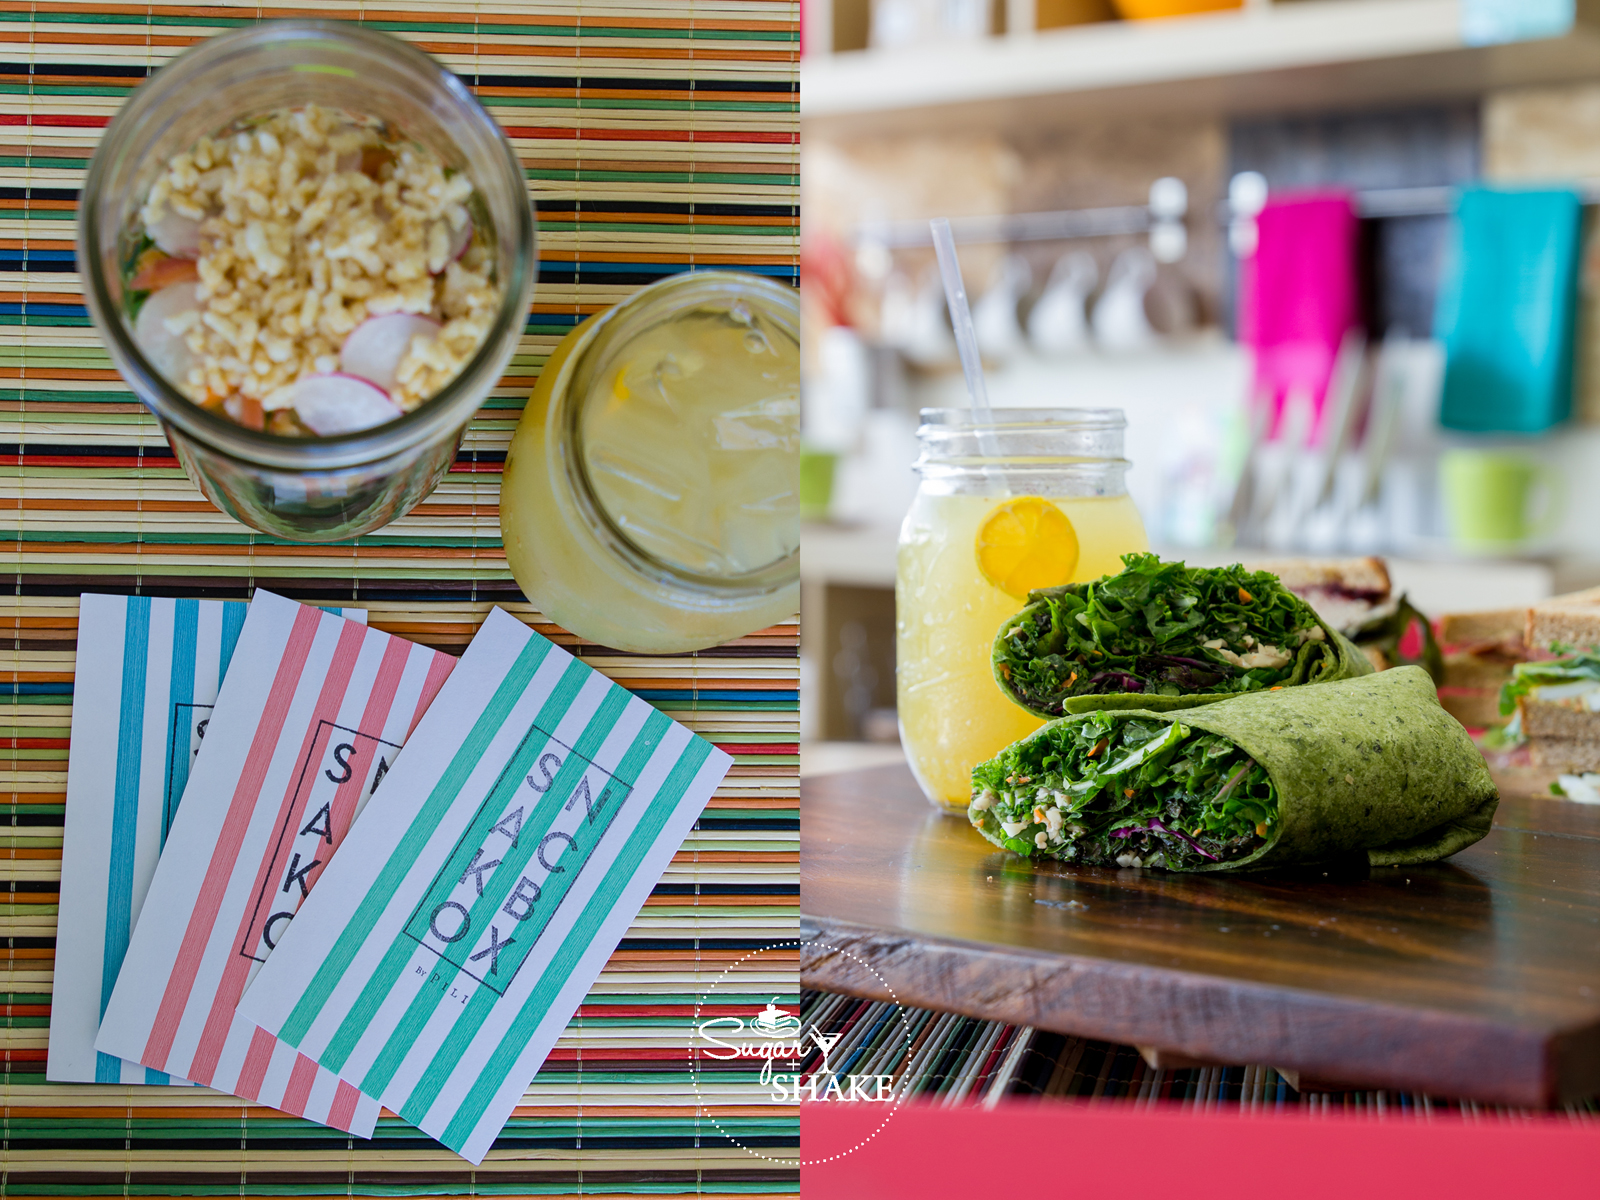 Snackbox treats! LEFT: Salad Jar and Olena Lemonade. RIGHT: Hirabara Farms Kale Wrap and Olena Lemonade. © 2014 Sugar + Shake